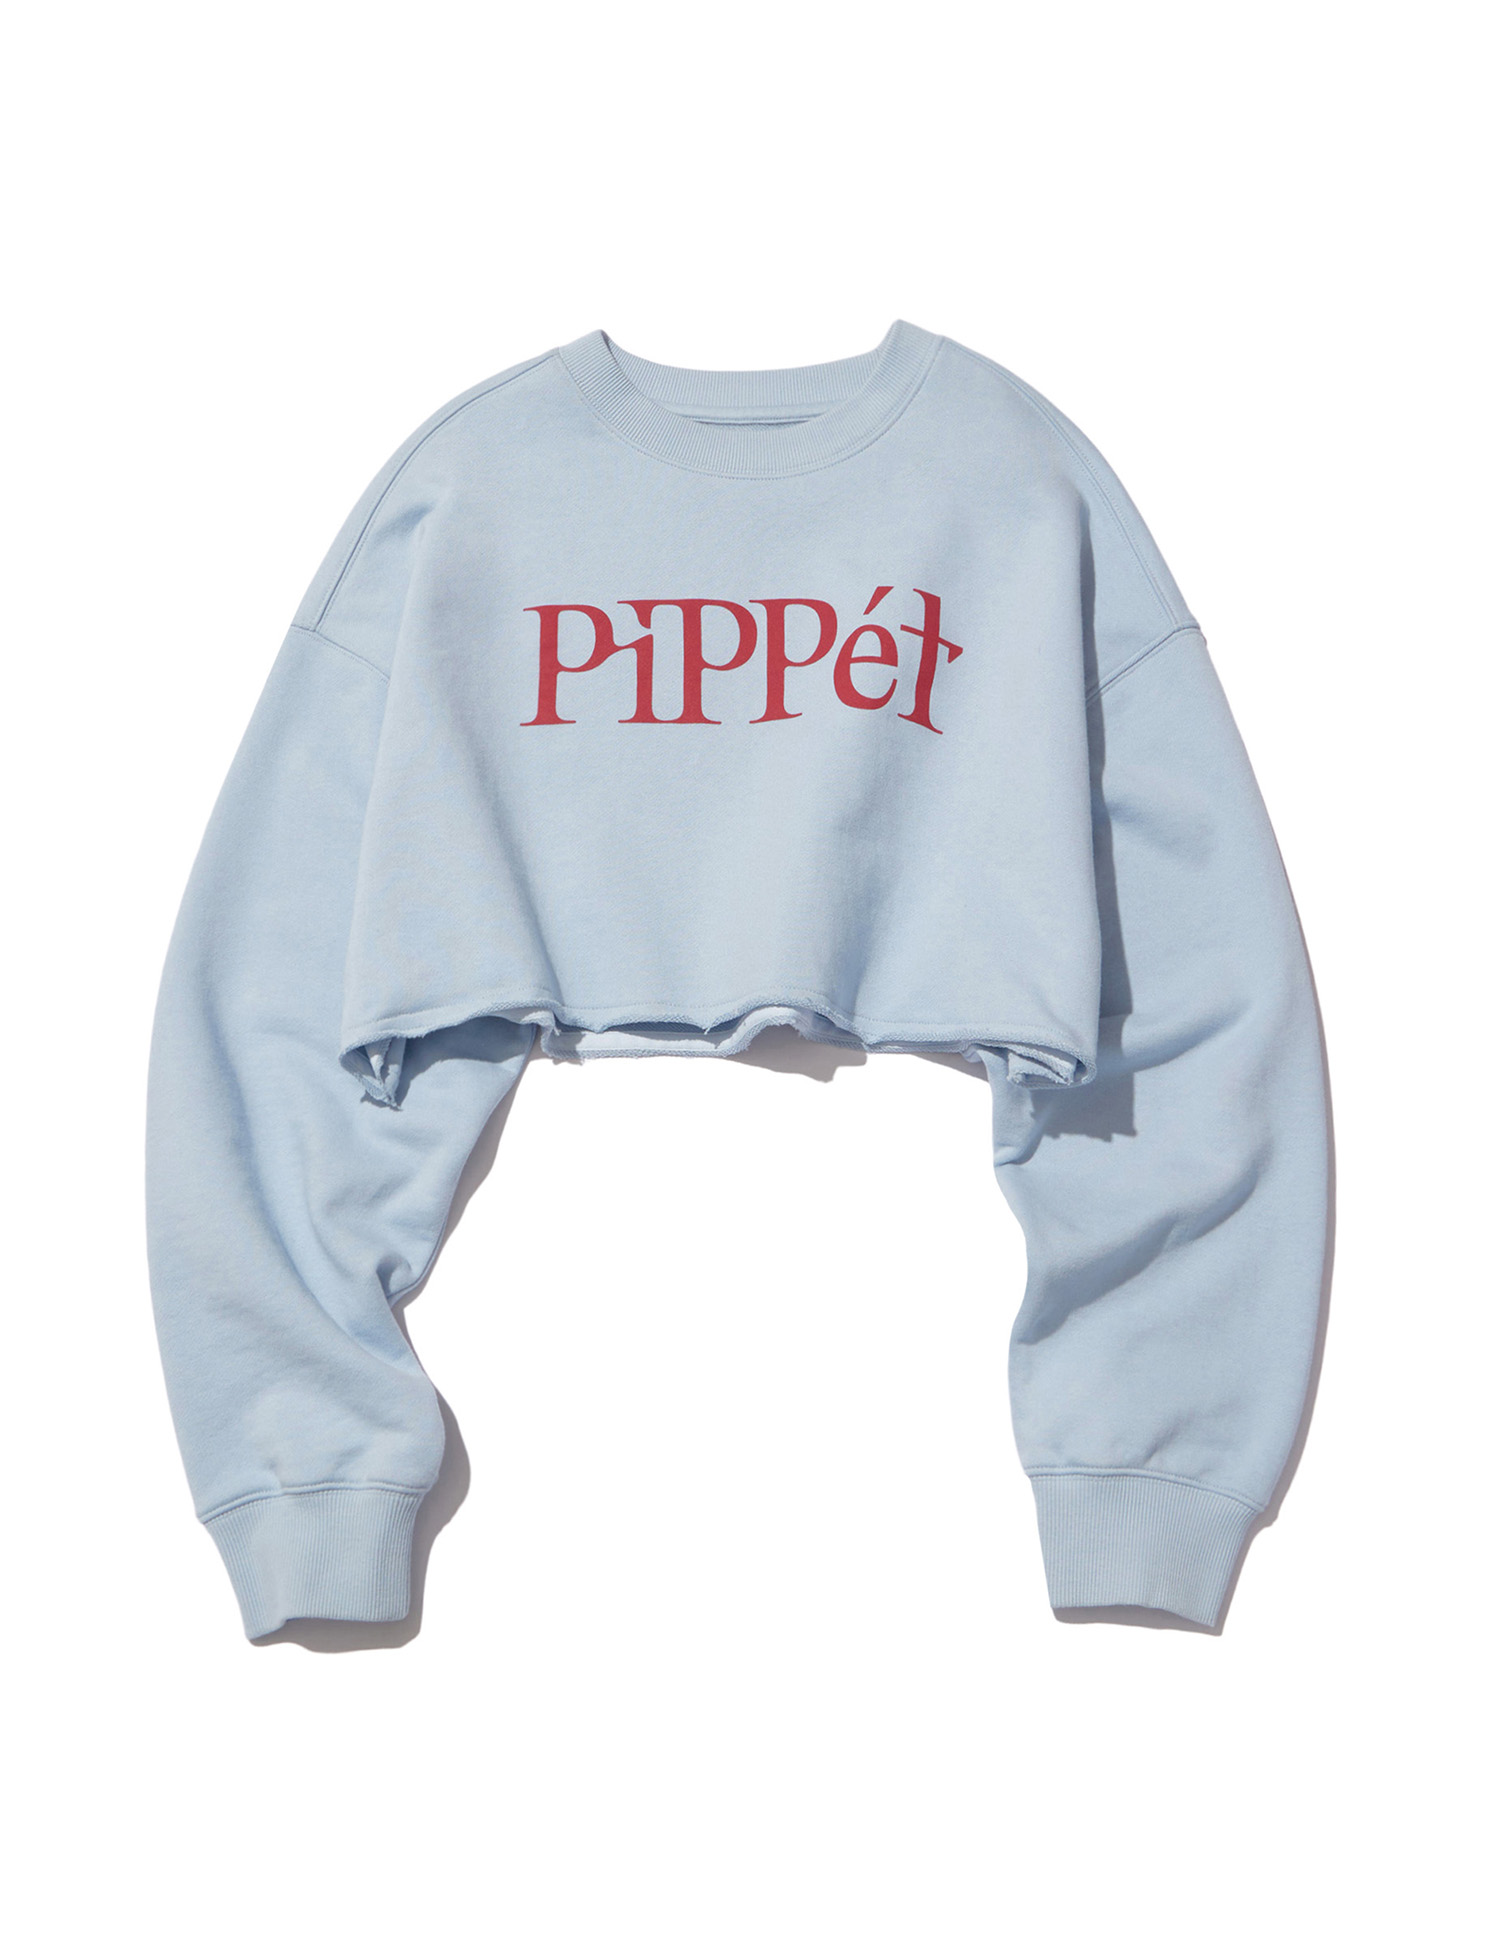 Pippet Crop Sweatshirt (sky blue)